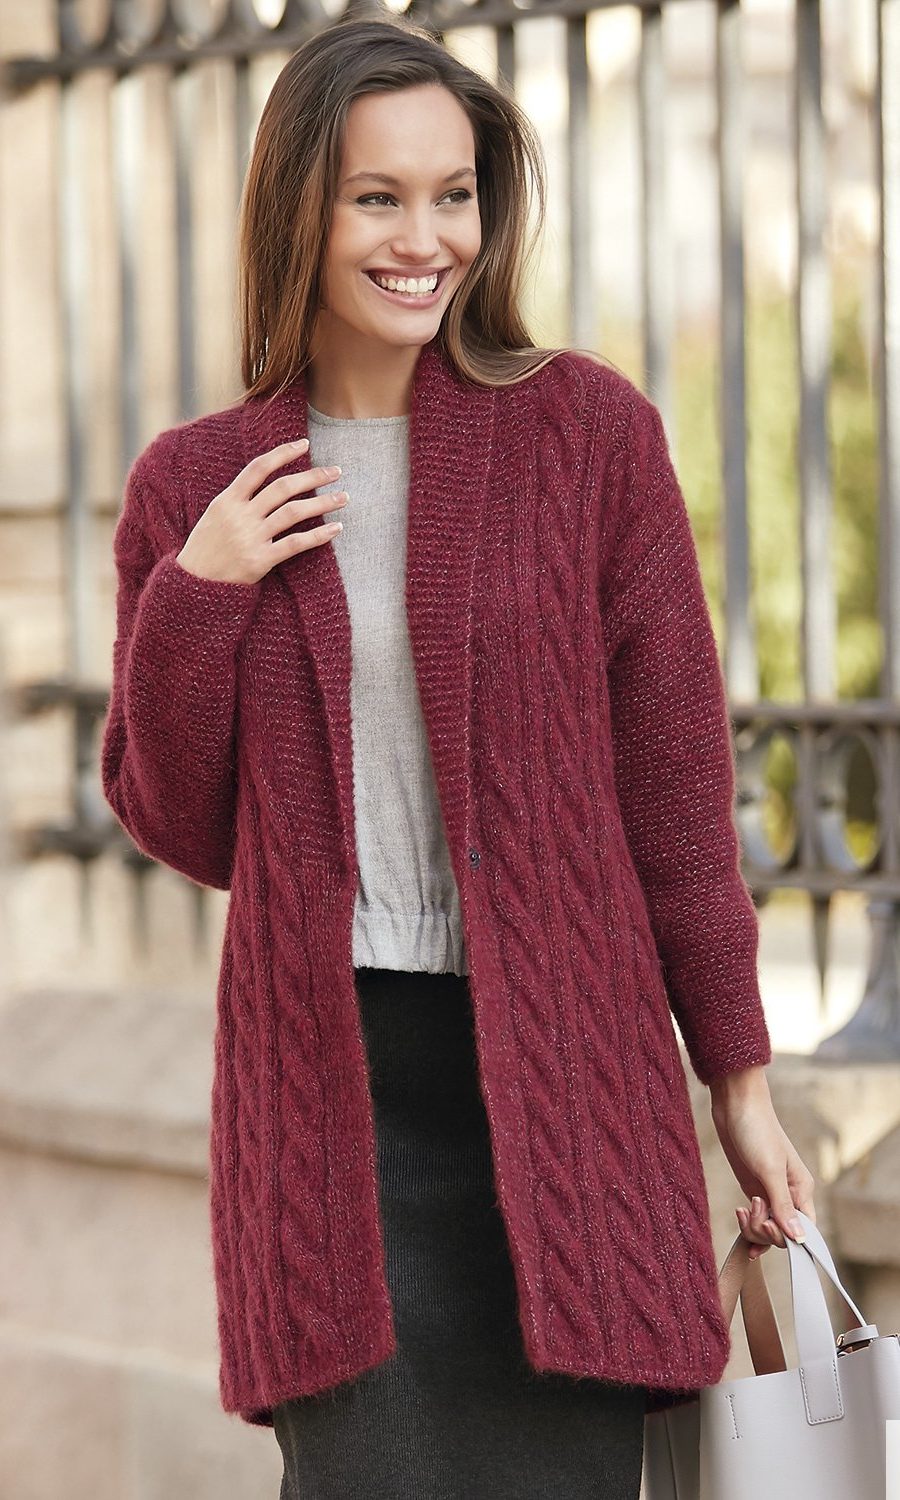 pattern-knit-crochet-woman-jacket-autumn-winter-katia-6092-12-g